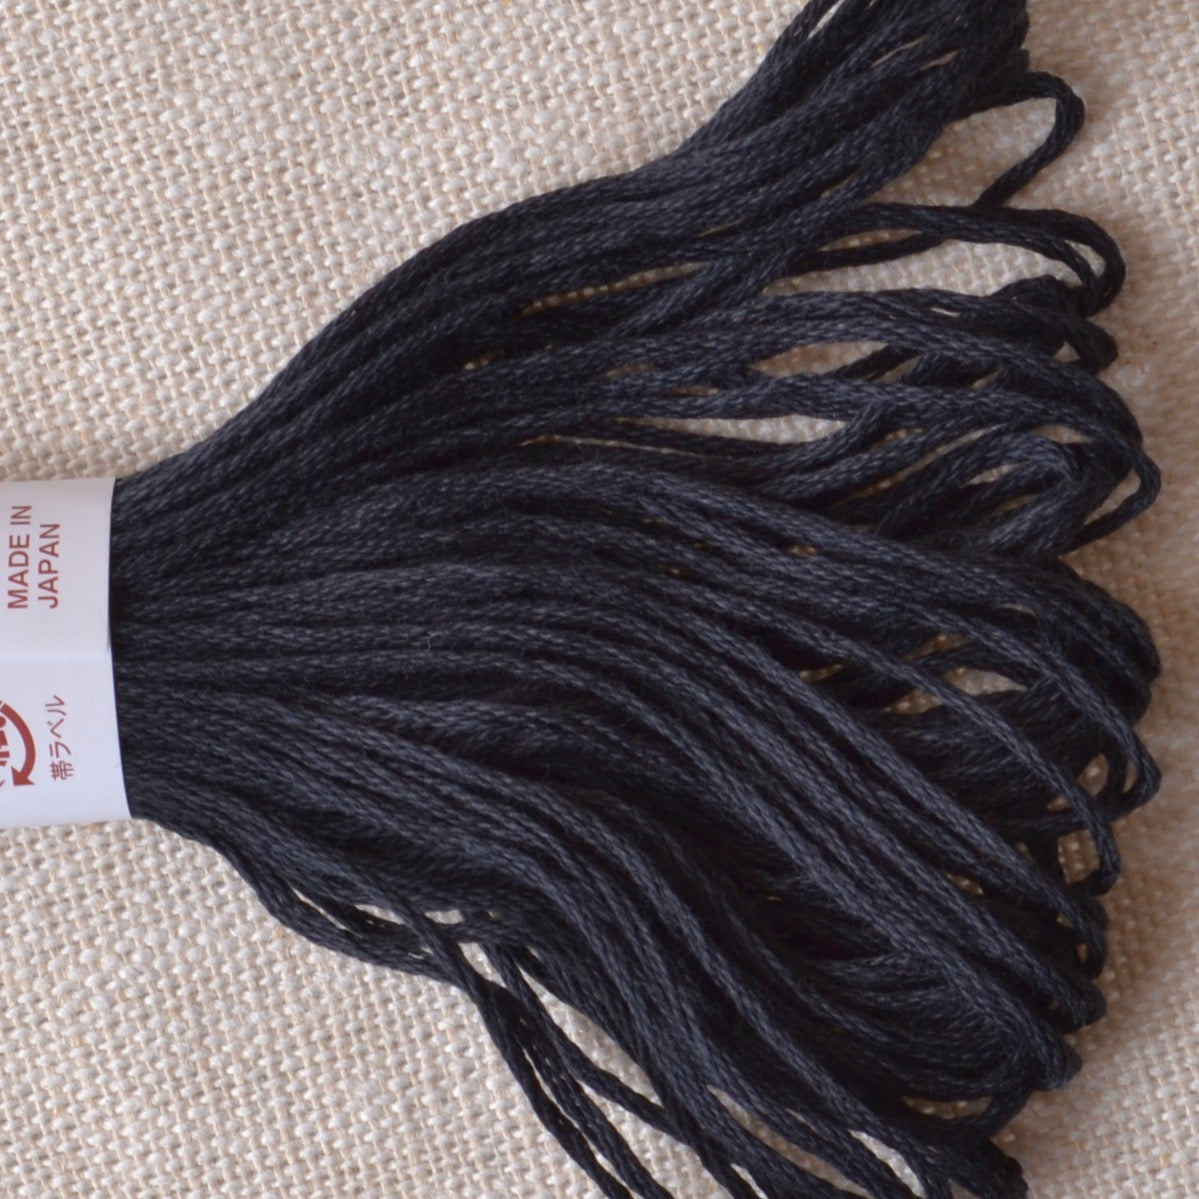 Kogin Sashiko Threads - A Threaded Needle